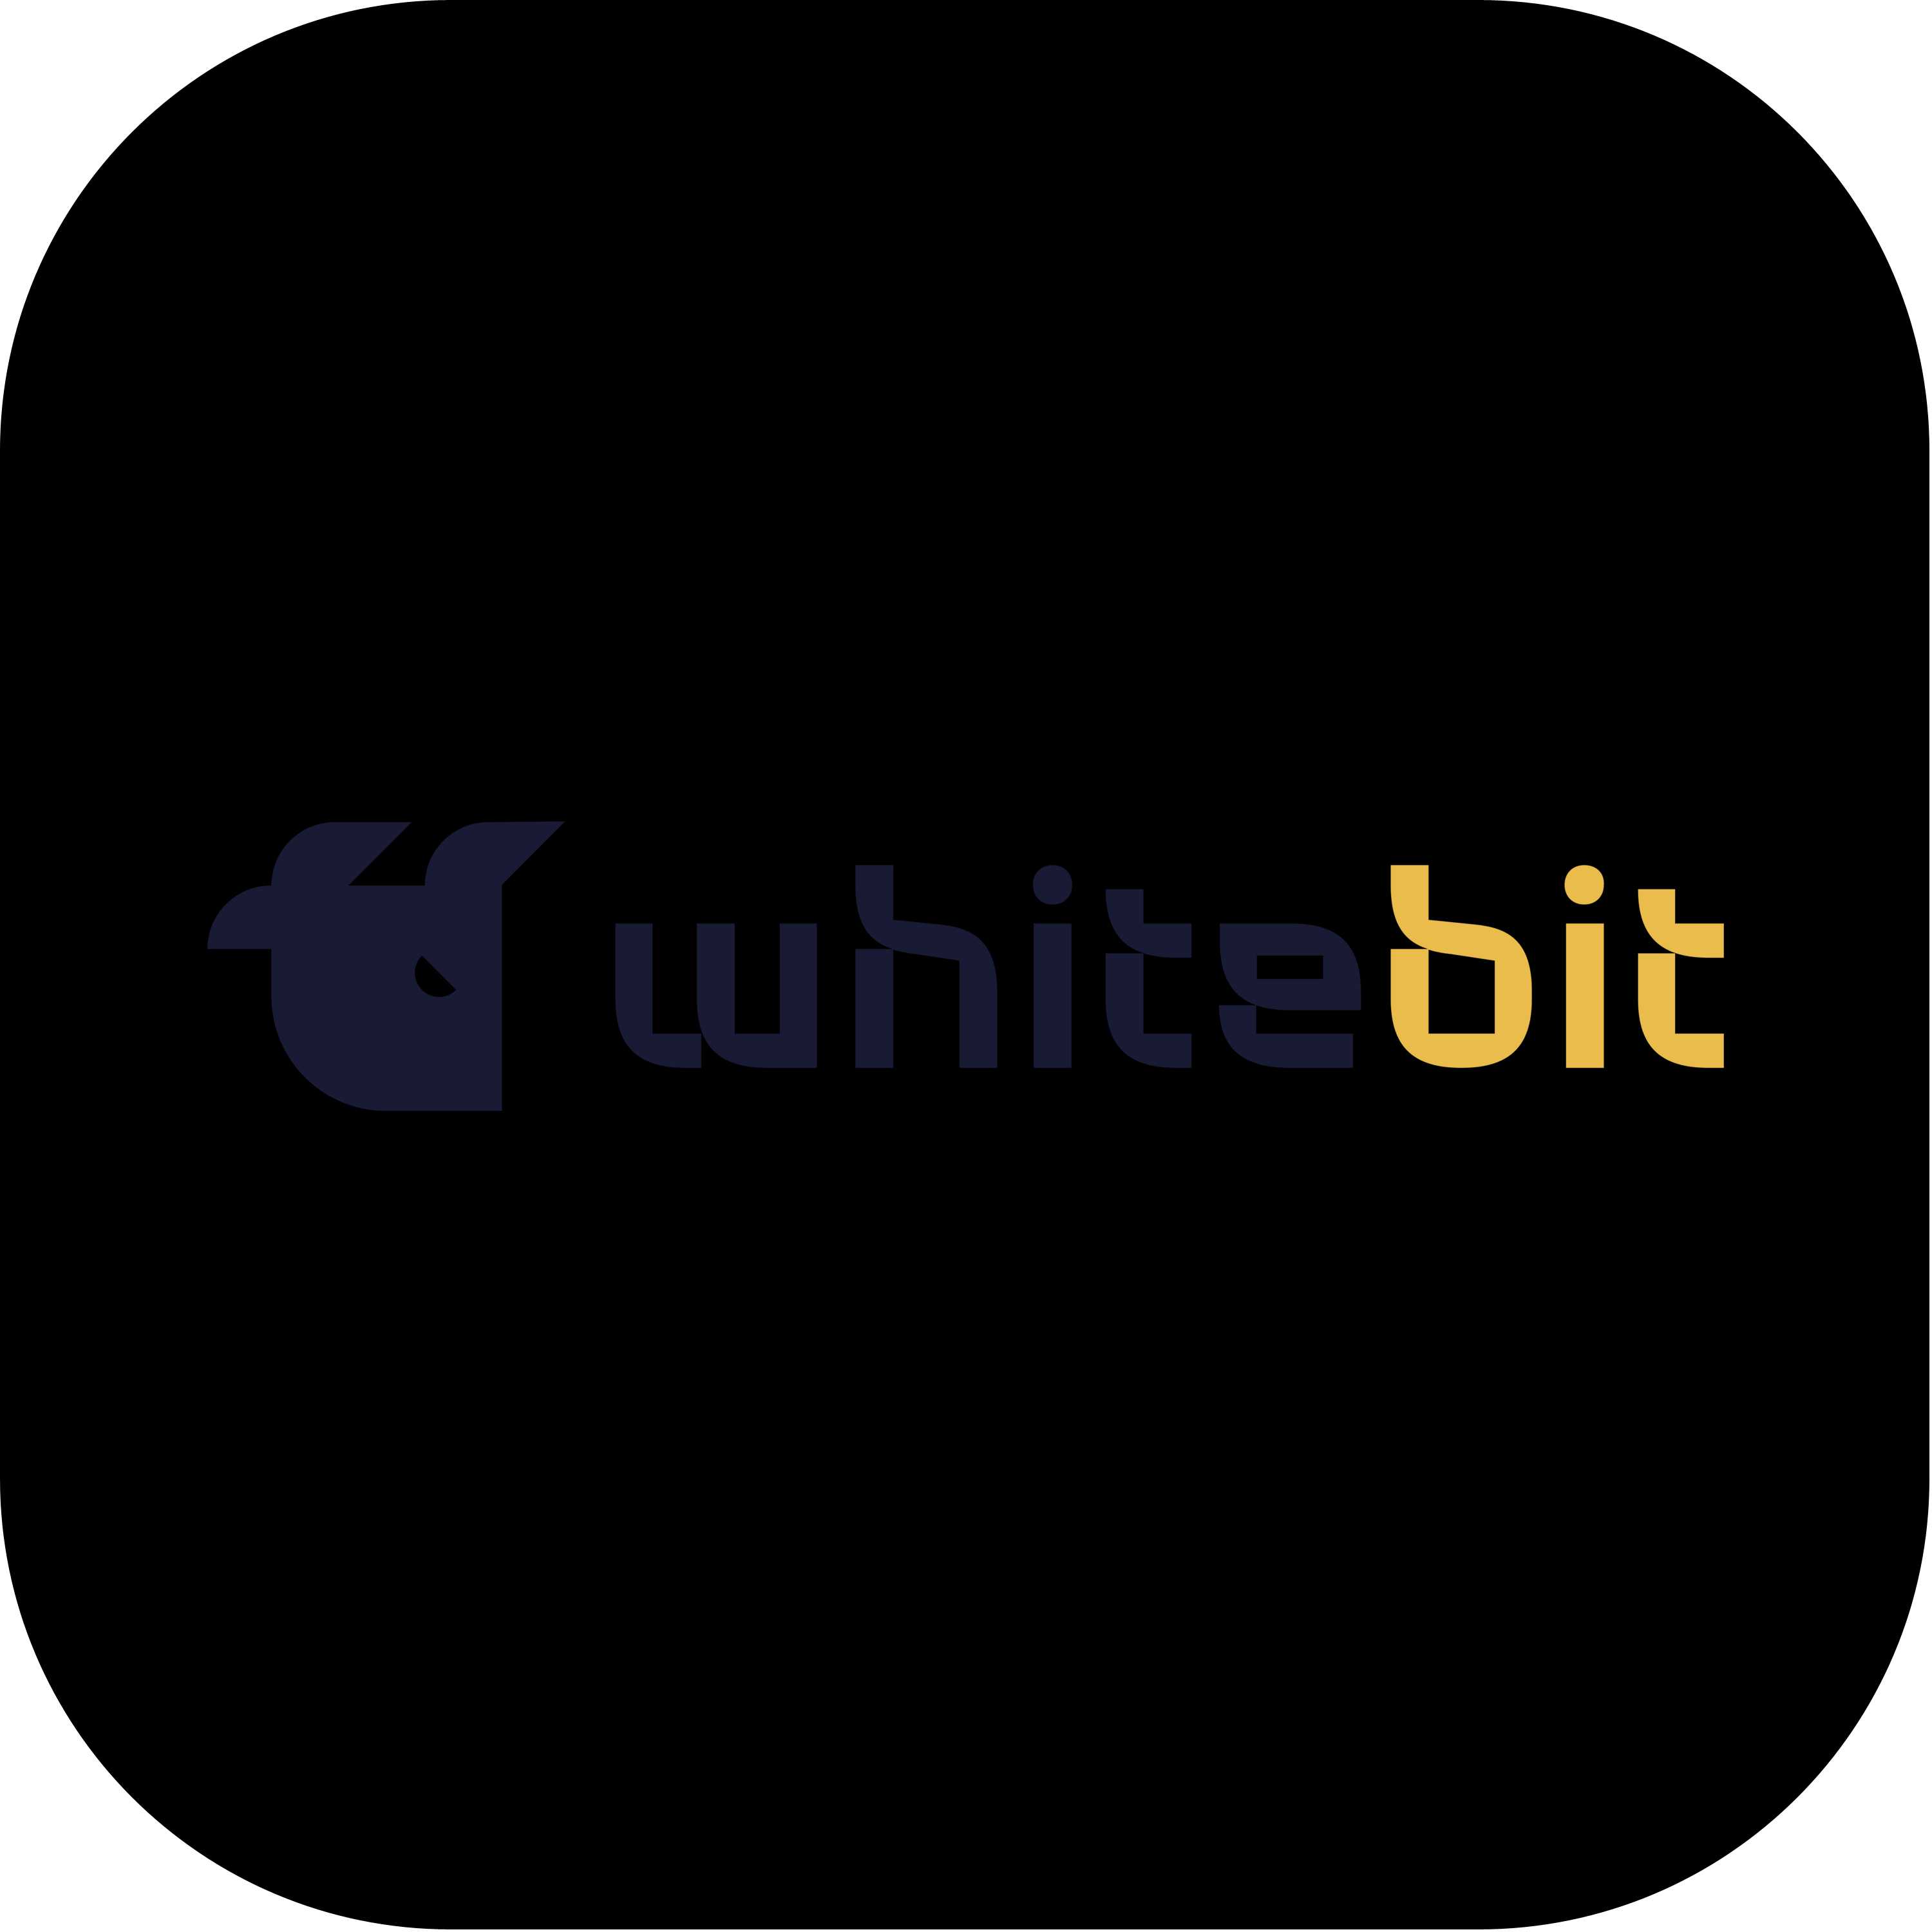 Whitebit Logo Transparent Picture